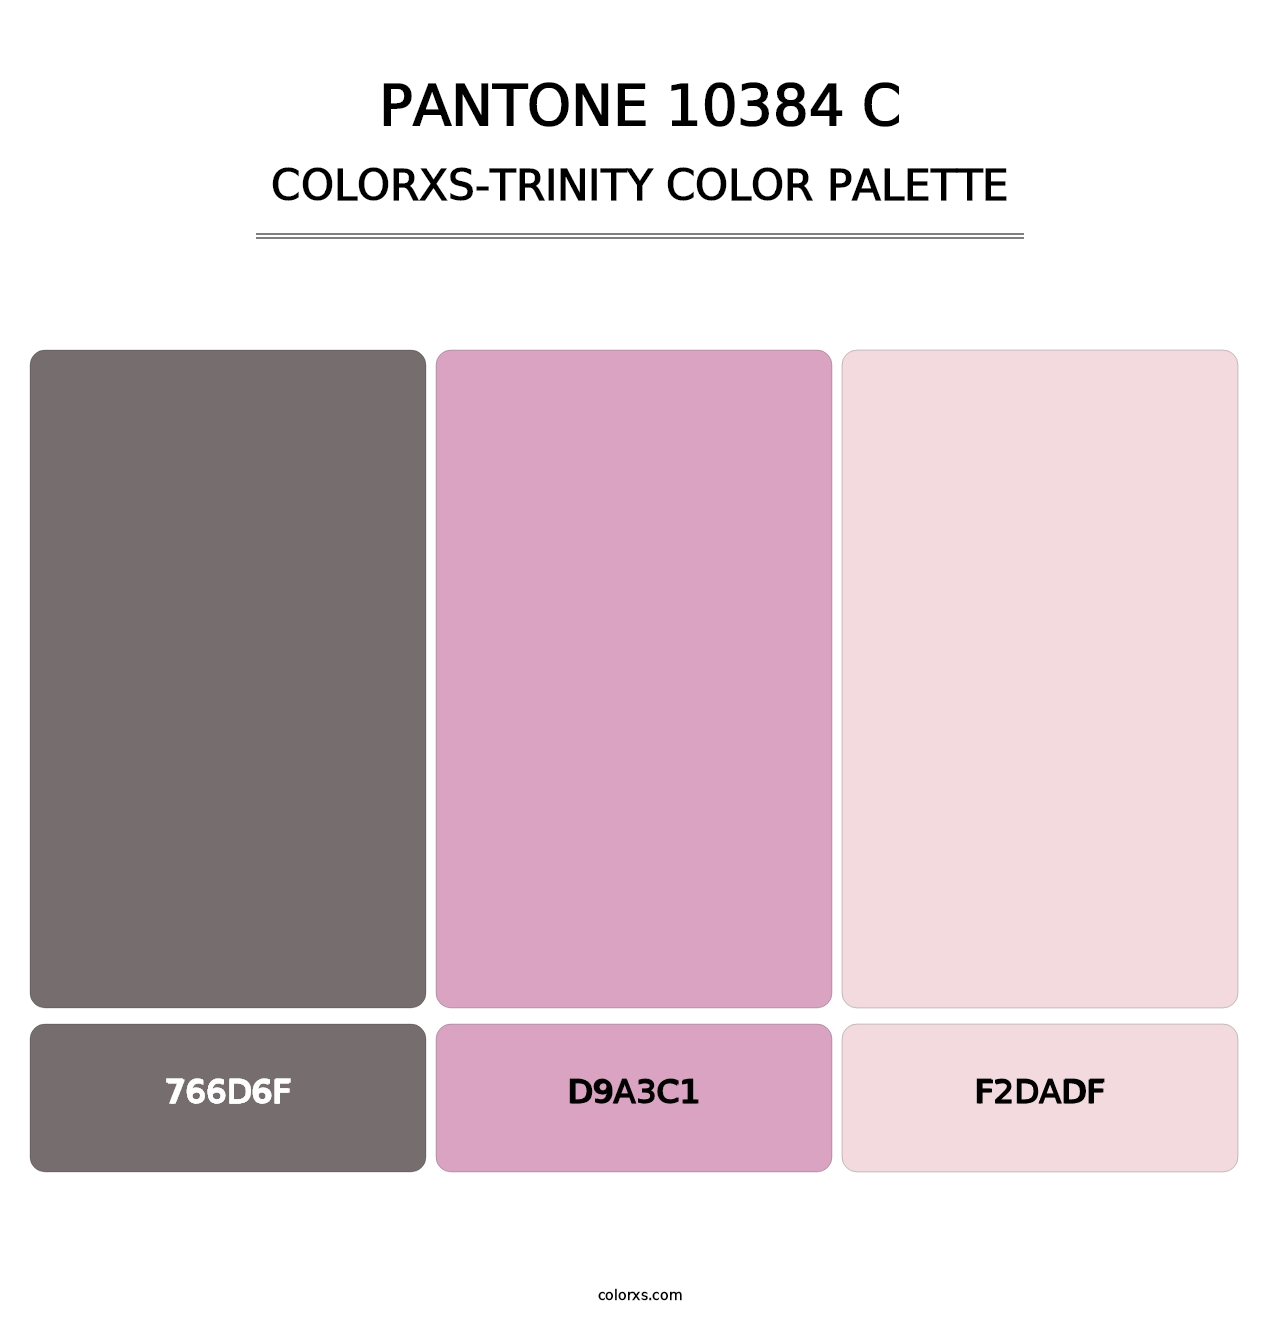 PANTONE 10384 C - Colorxs Trinity Palette